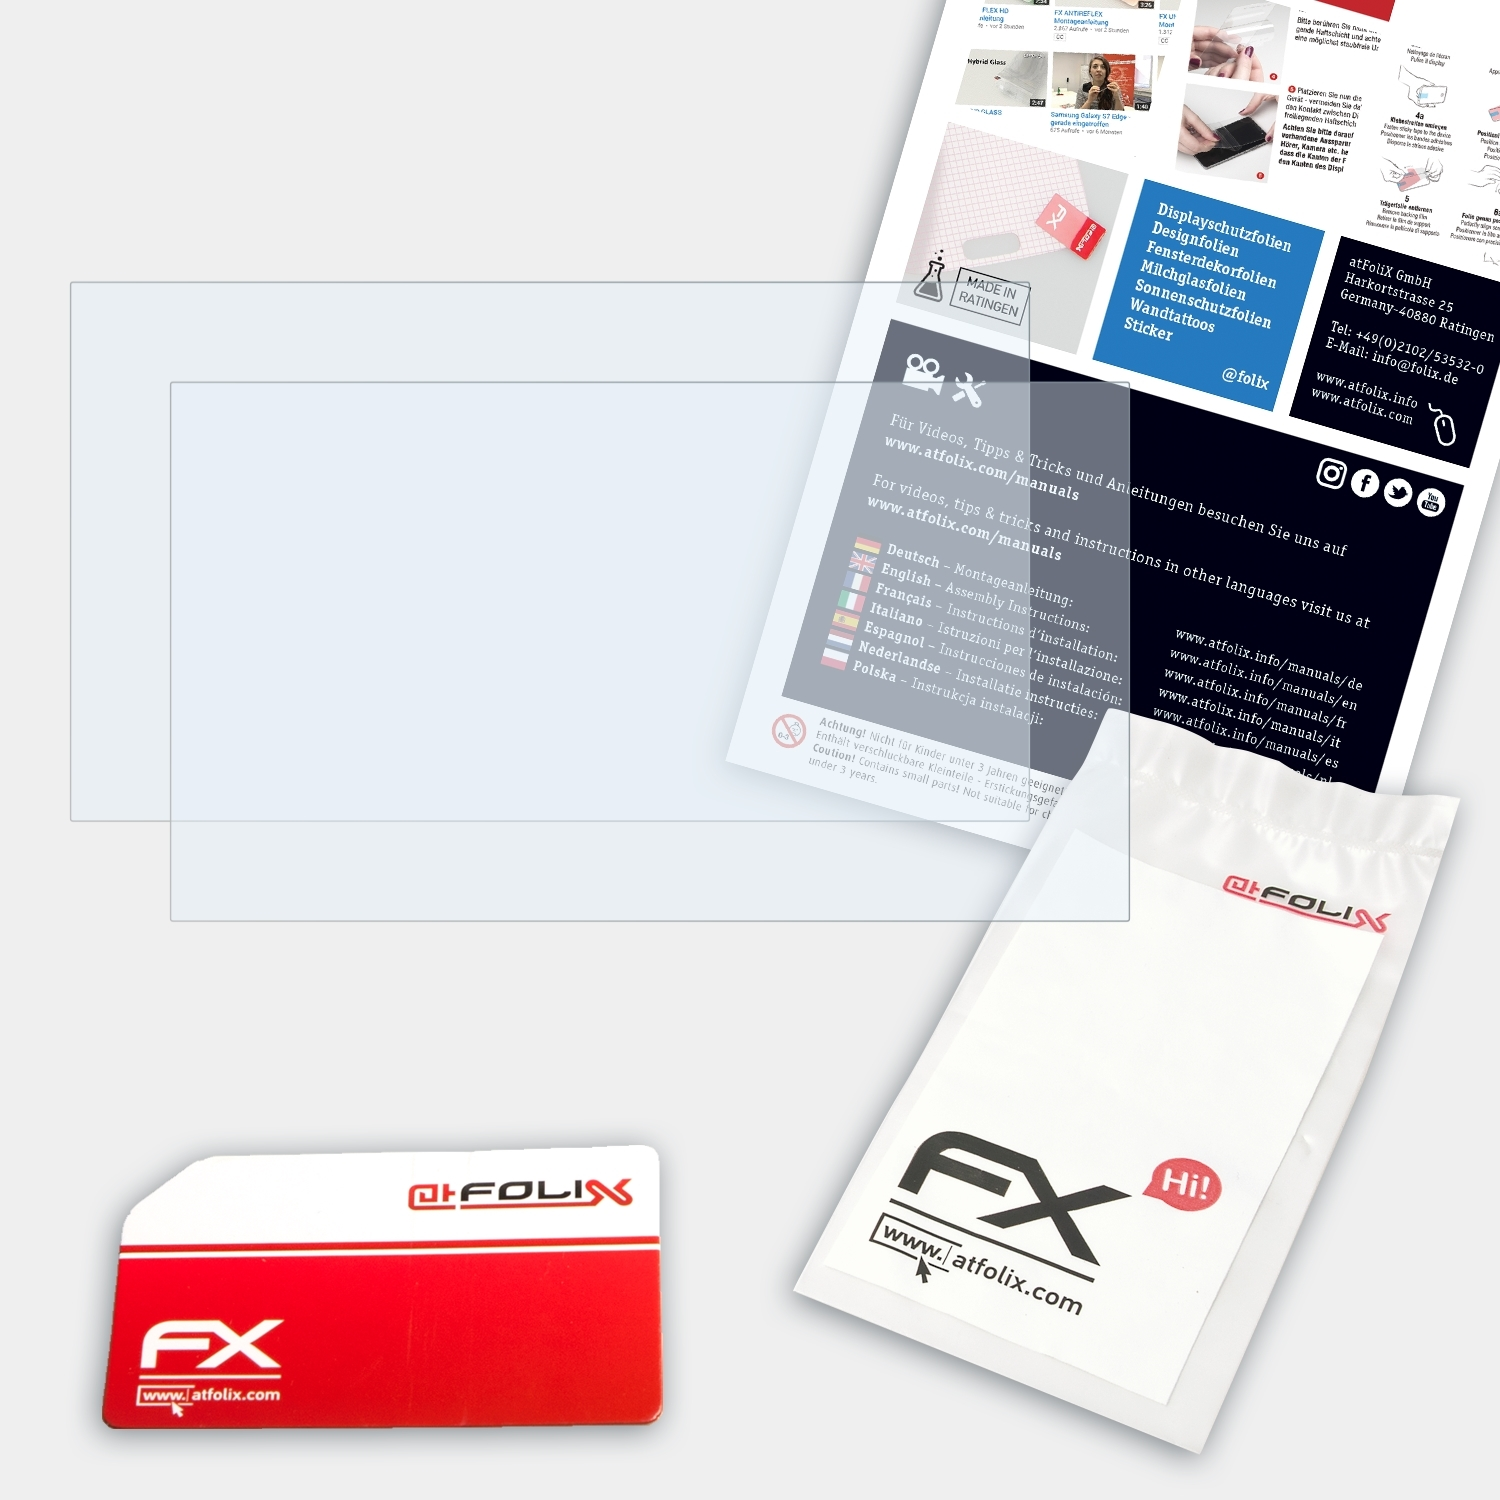 ATFOLIX 2x FX-Clear Displayschutz(für Asus (UX333FN)) 13 ZenBook